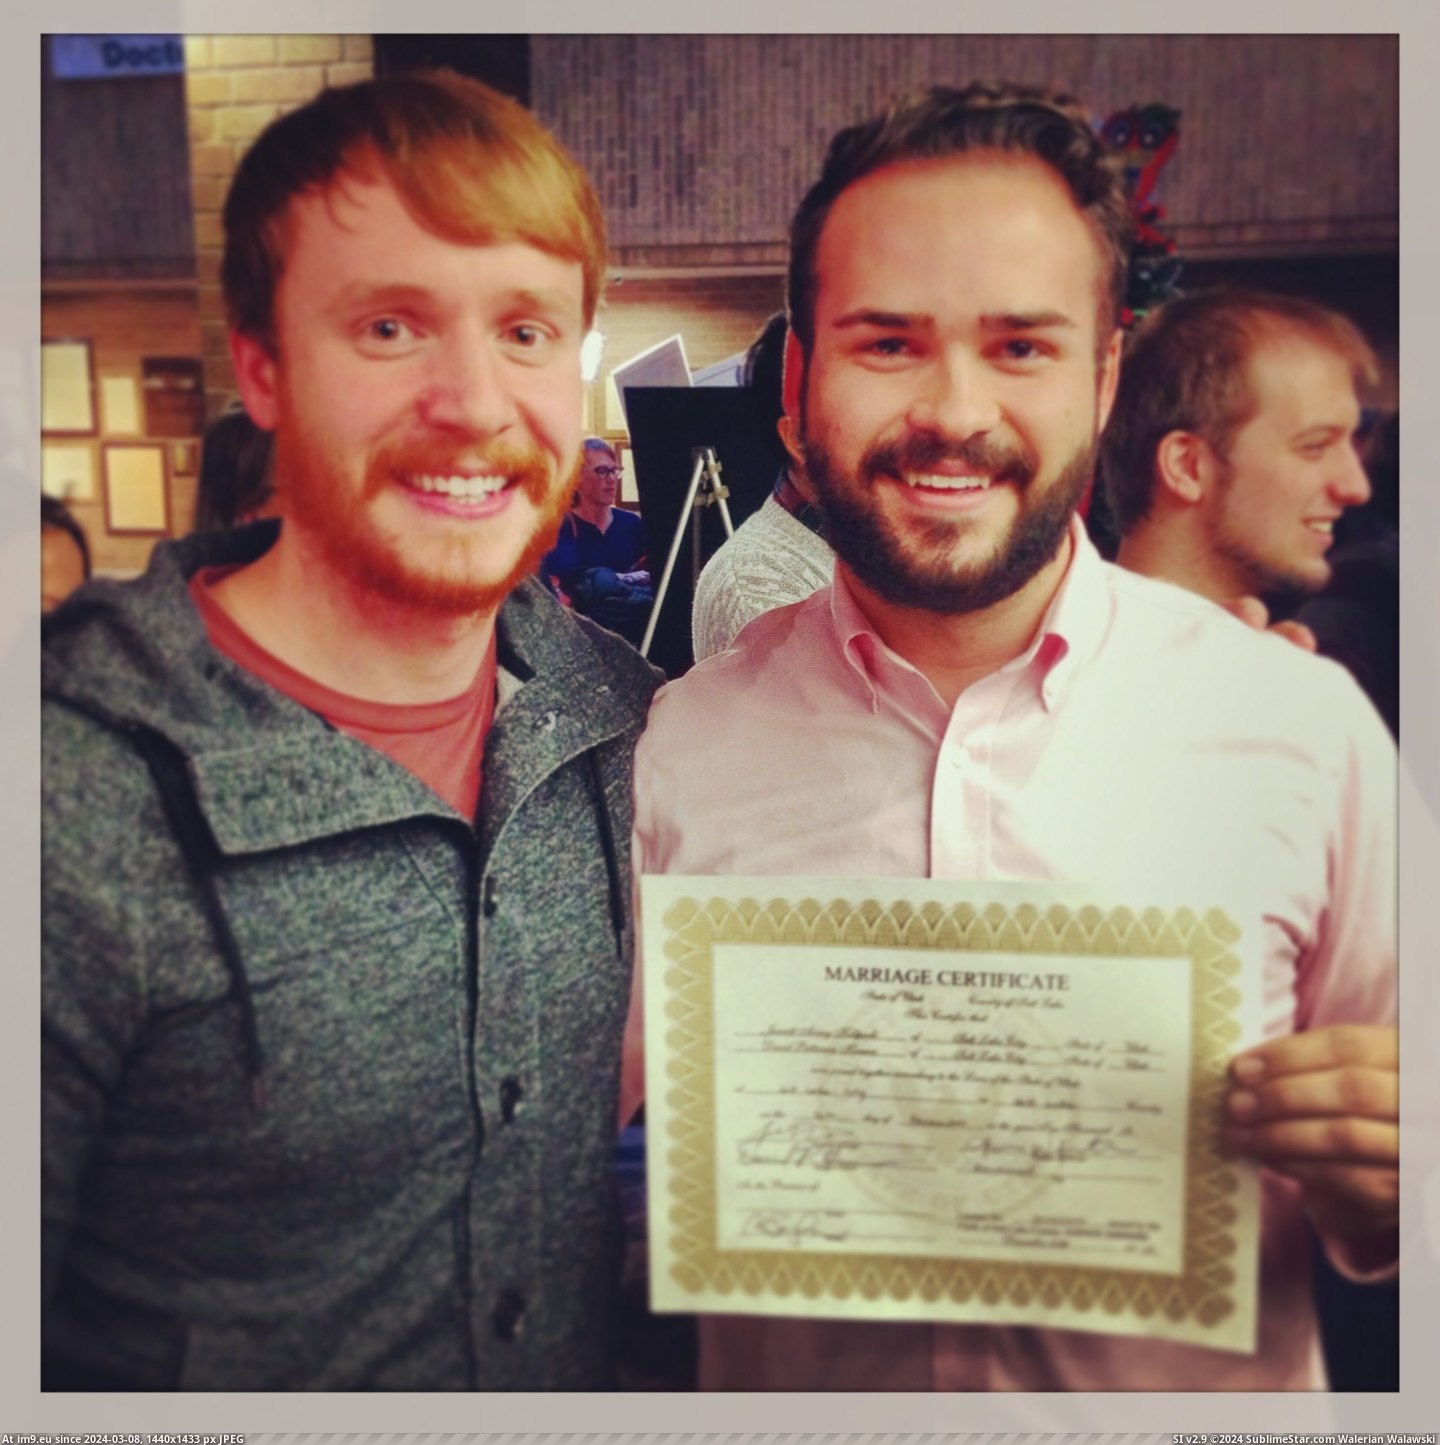 #Gay #All #Married #Got #Utah [Pics] Just got gay married in Utah y'all! Pic. (Изображение из альбом My r/PICS favs))